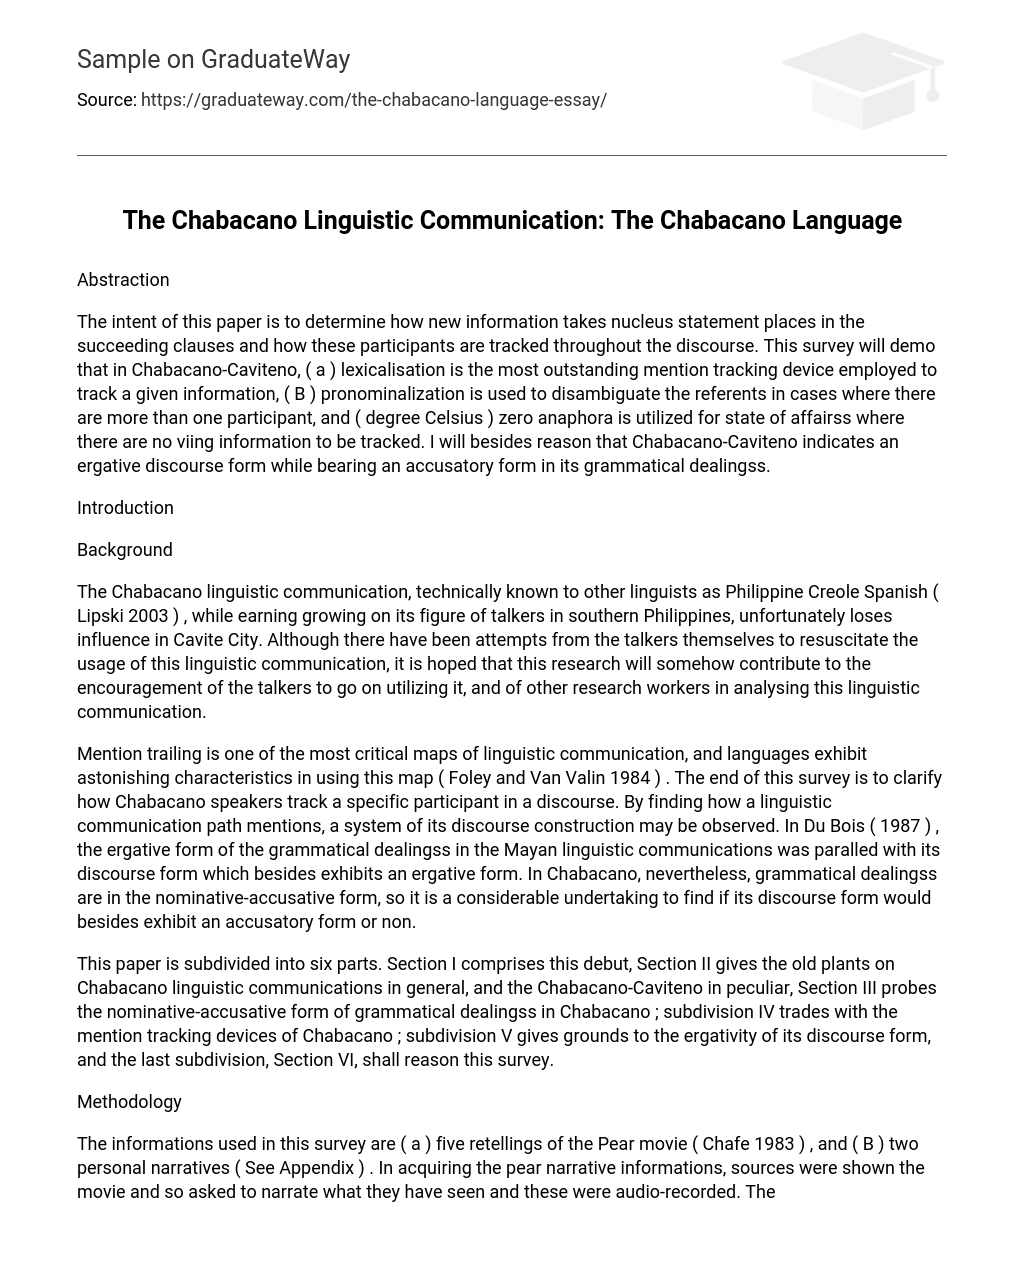 The Chabacano Linguistic Communication: The Chabacano Language